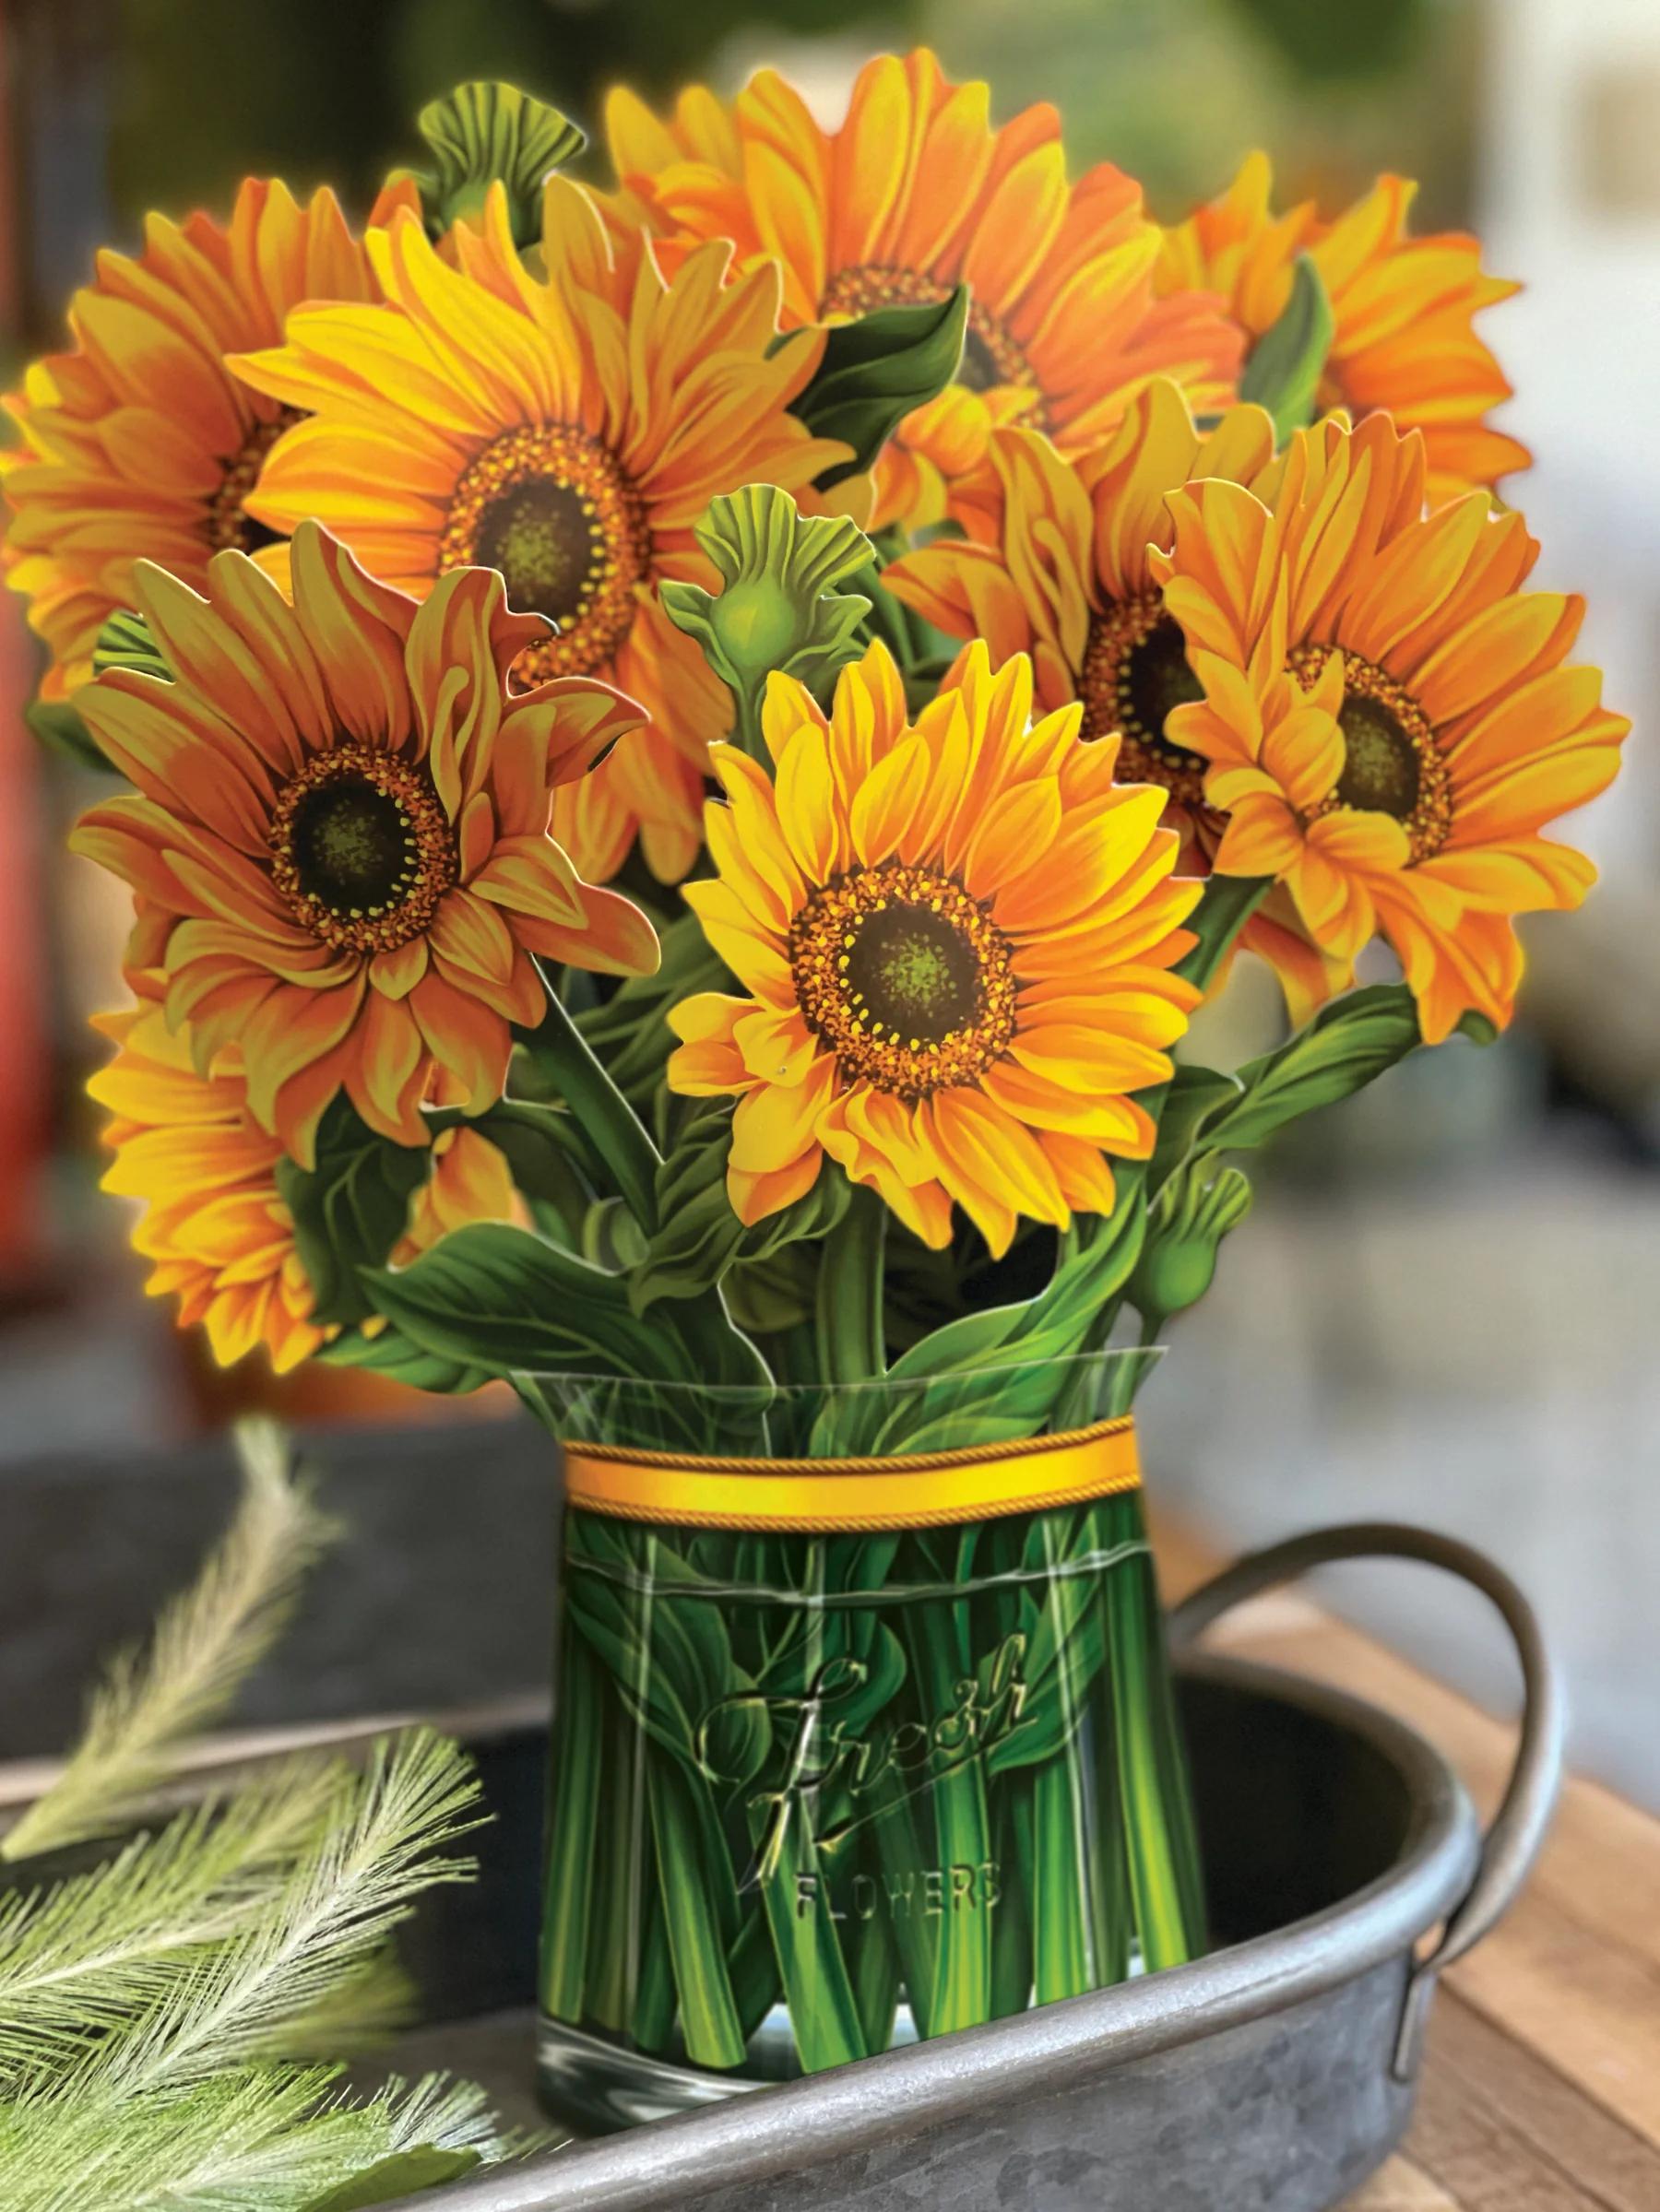 A vase full of Fresh Cut Paper sunflowers